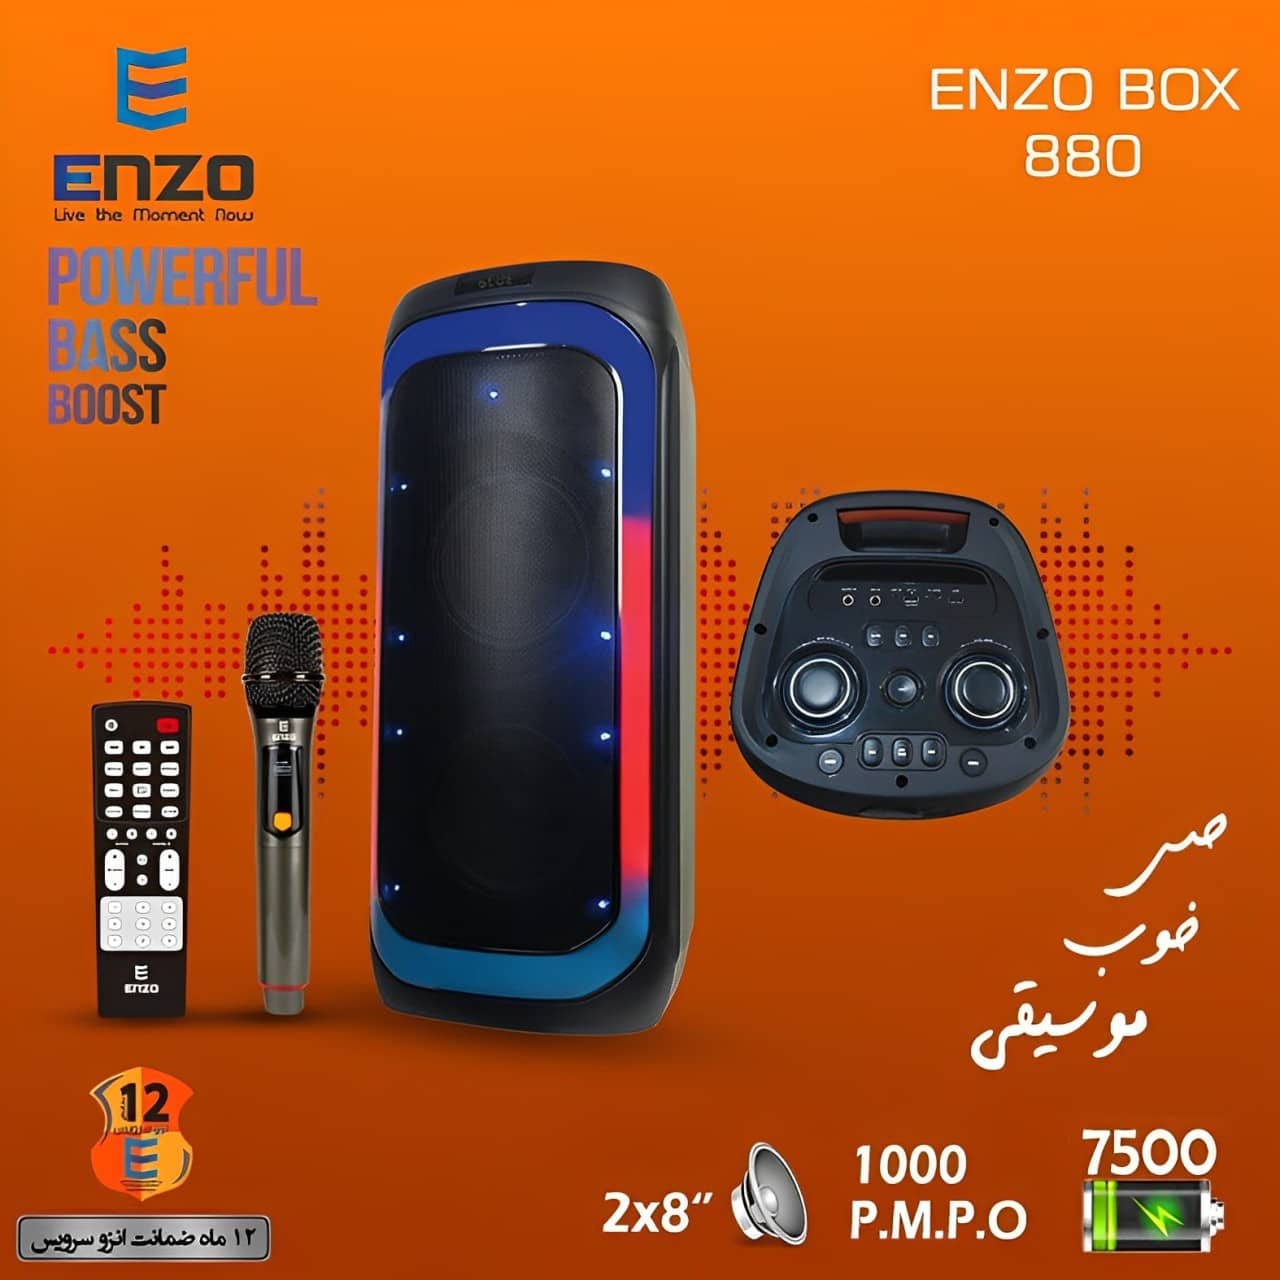 ENZO BOX 880 2 8 inch Speaker Wireless Microphone 1